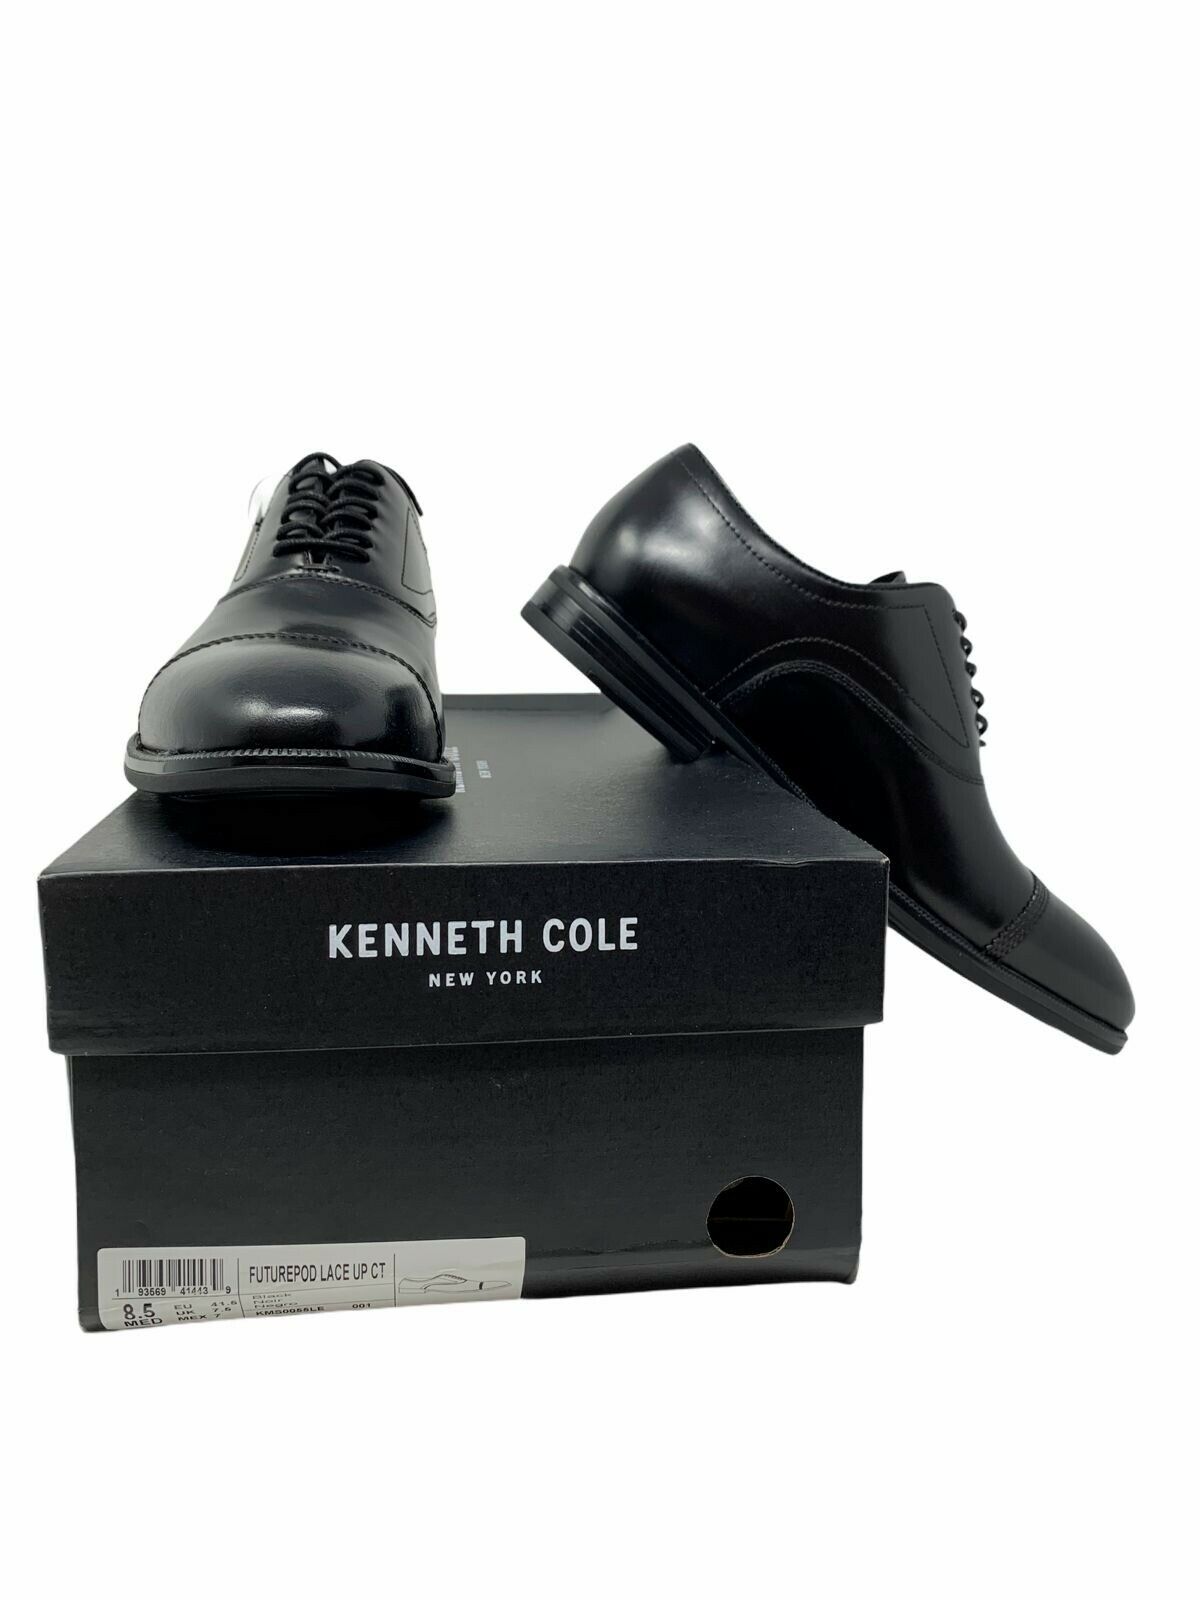 Kenneth Cole Futurepod Lace Up Black Men Dress Shoes Size 8.5